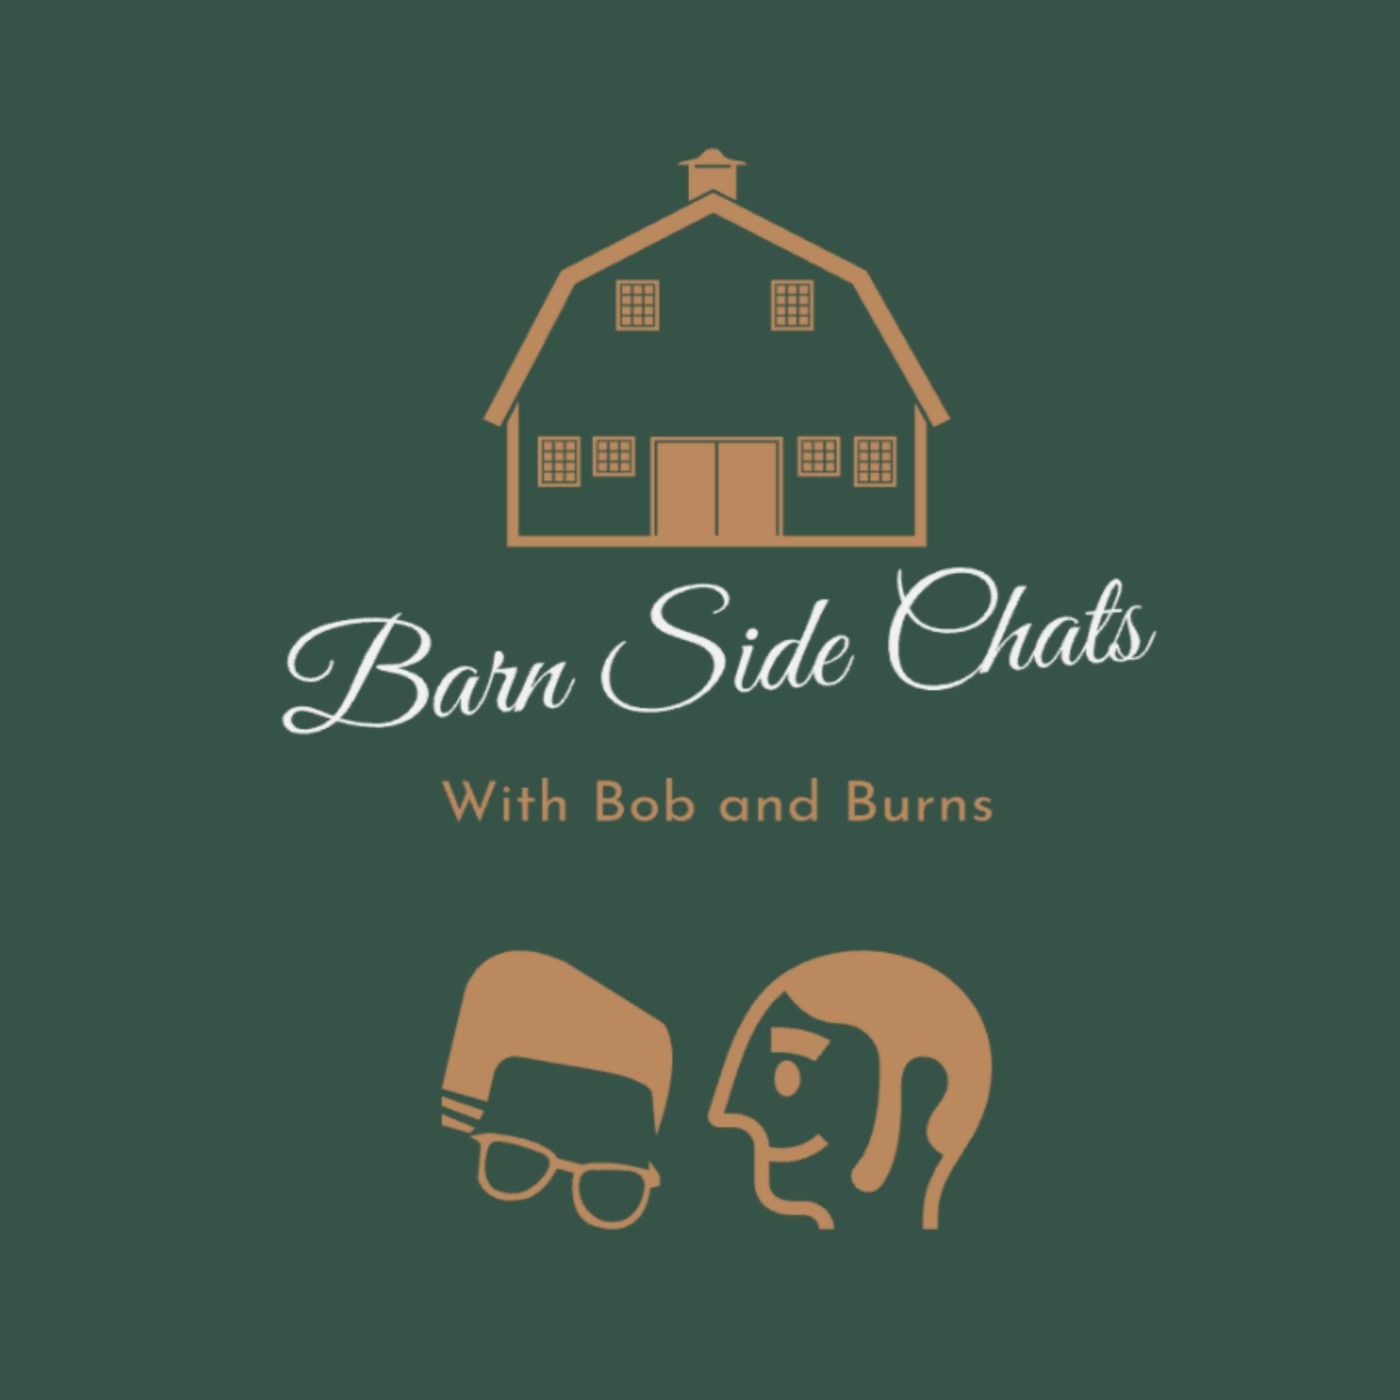 Barn Side Chats with Bob and Burns